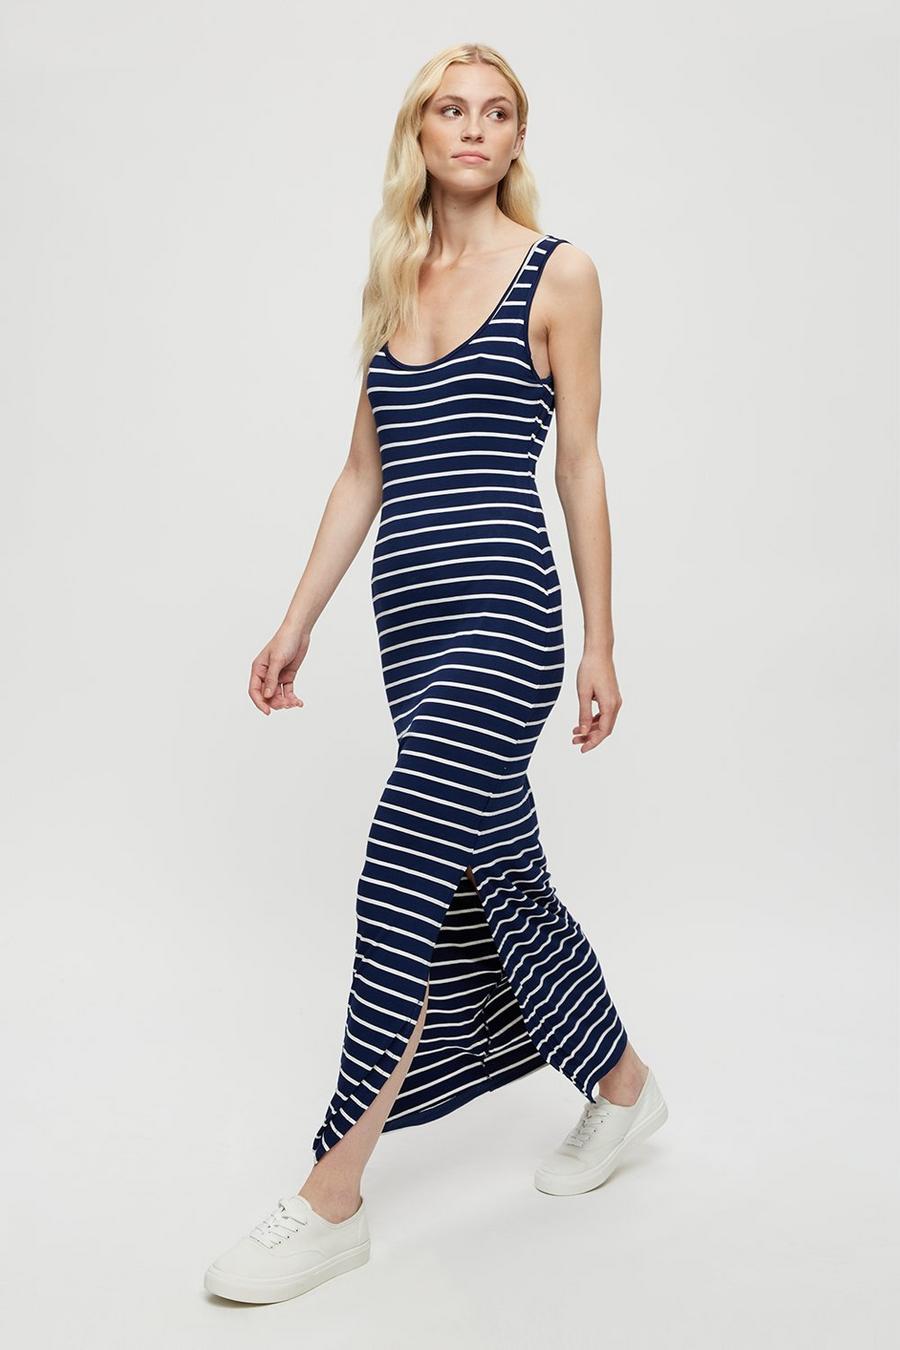 Printed Stripe Maxi Dress